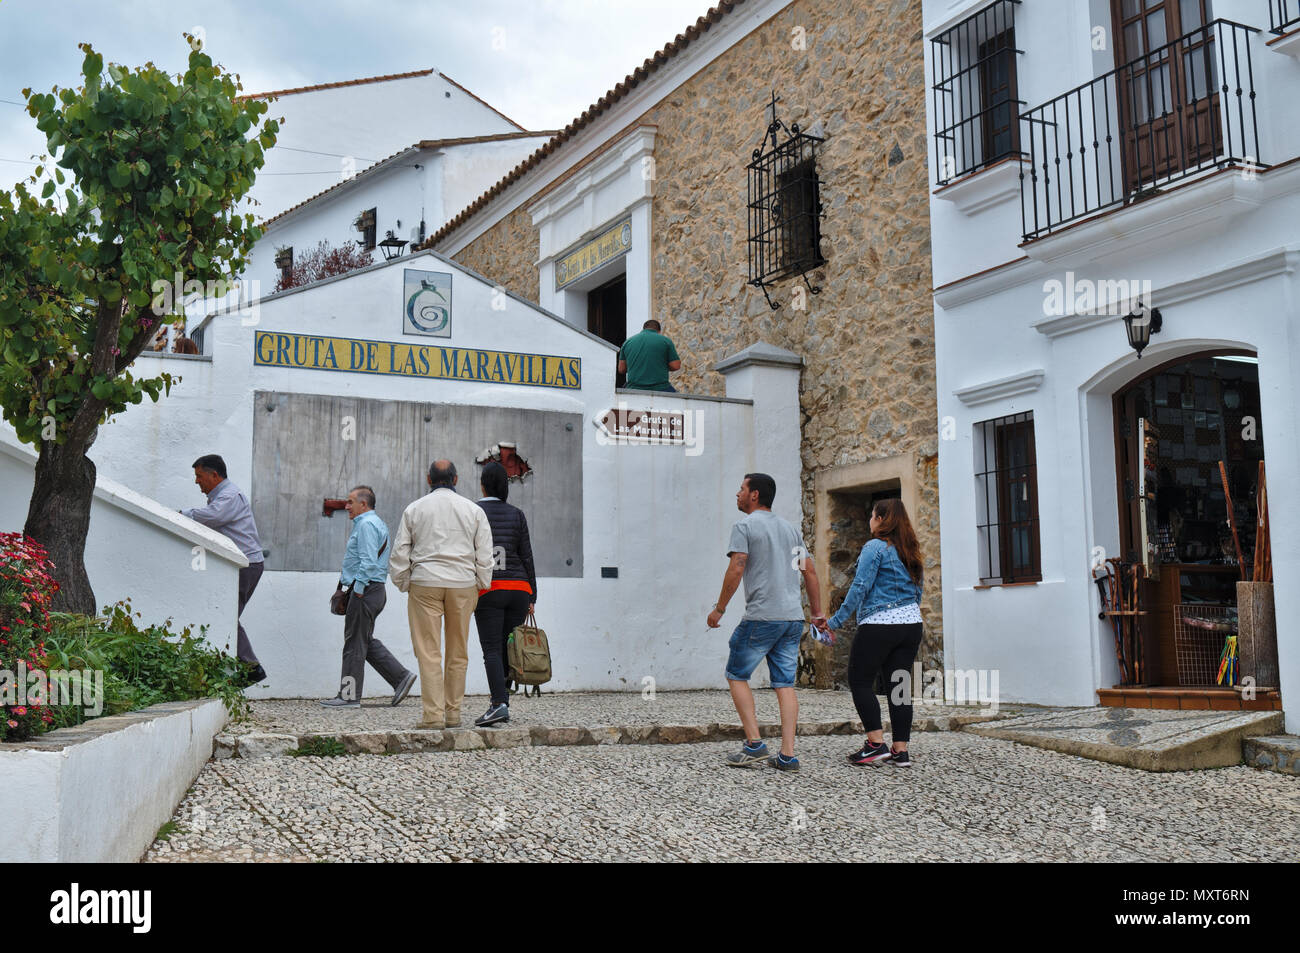 Gruta de las Maravillas outside building in Aracena. Andalusia, Spain Stock Photo